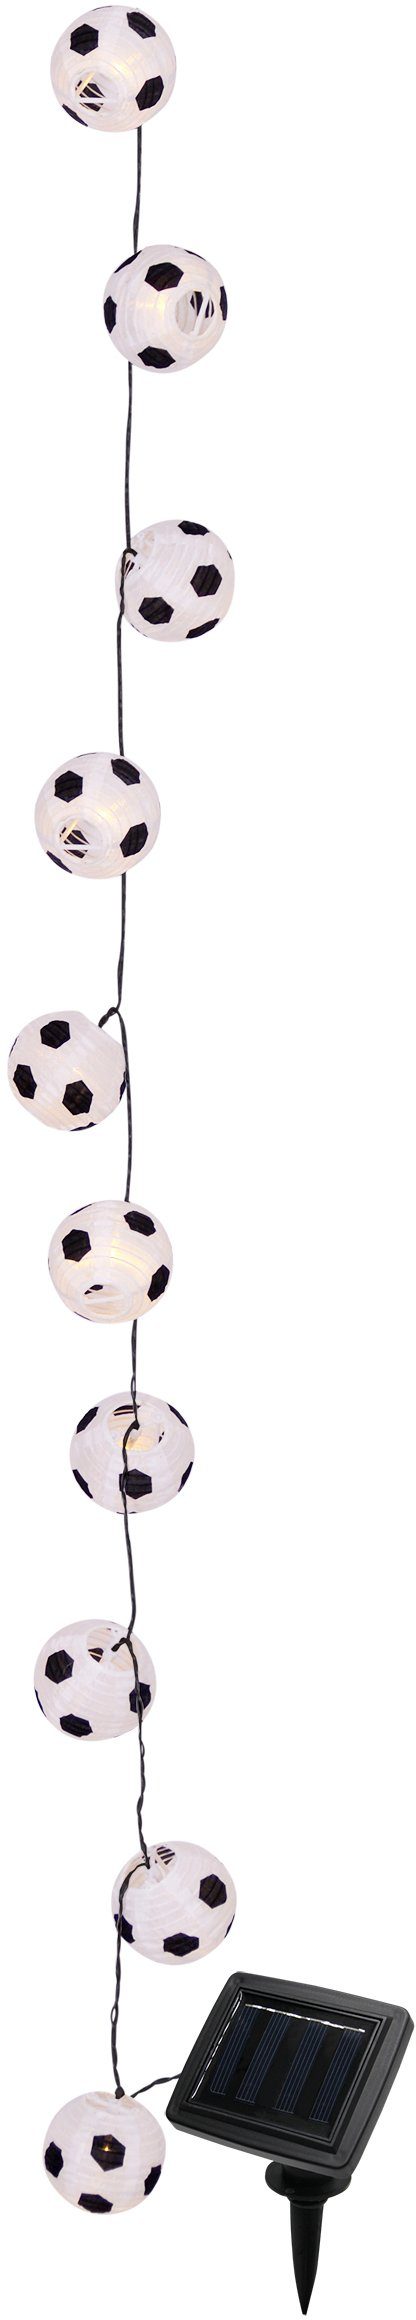 Outlet-Store näve Lichterkette Japanballon-20er-Solar-Lichterkette, Metall, Polyester, Kunststoff, Material: Fußball, weiß/schwarz Farbe